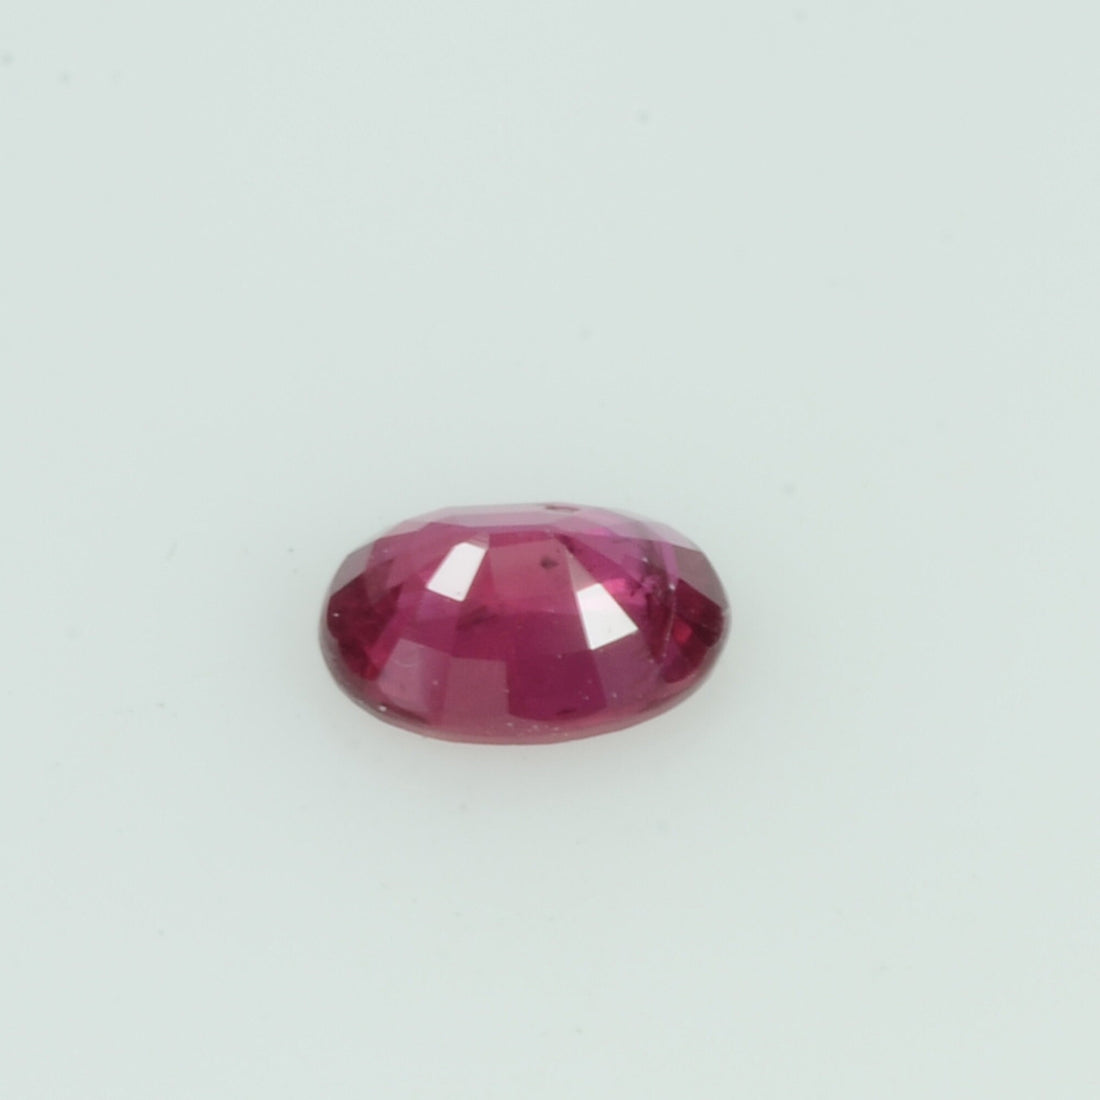 0.28 Cts Natural Burma Ruby Loose Gemstone Oval Cut